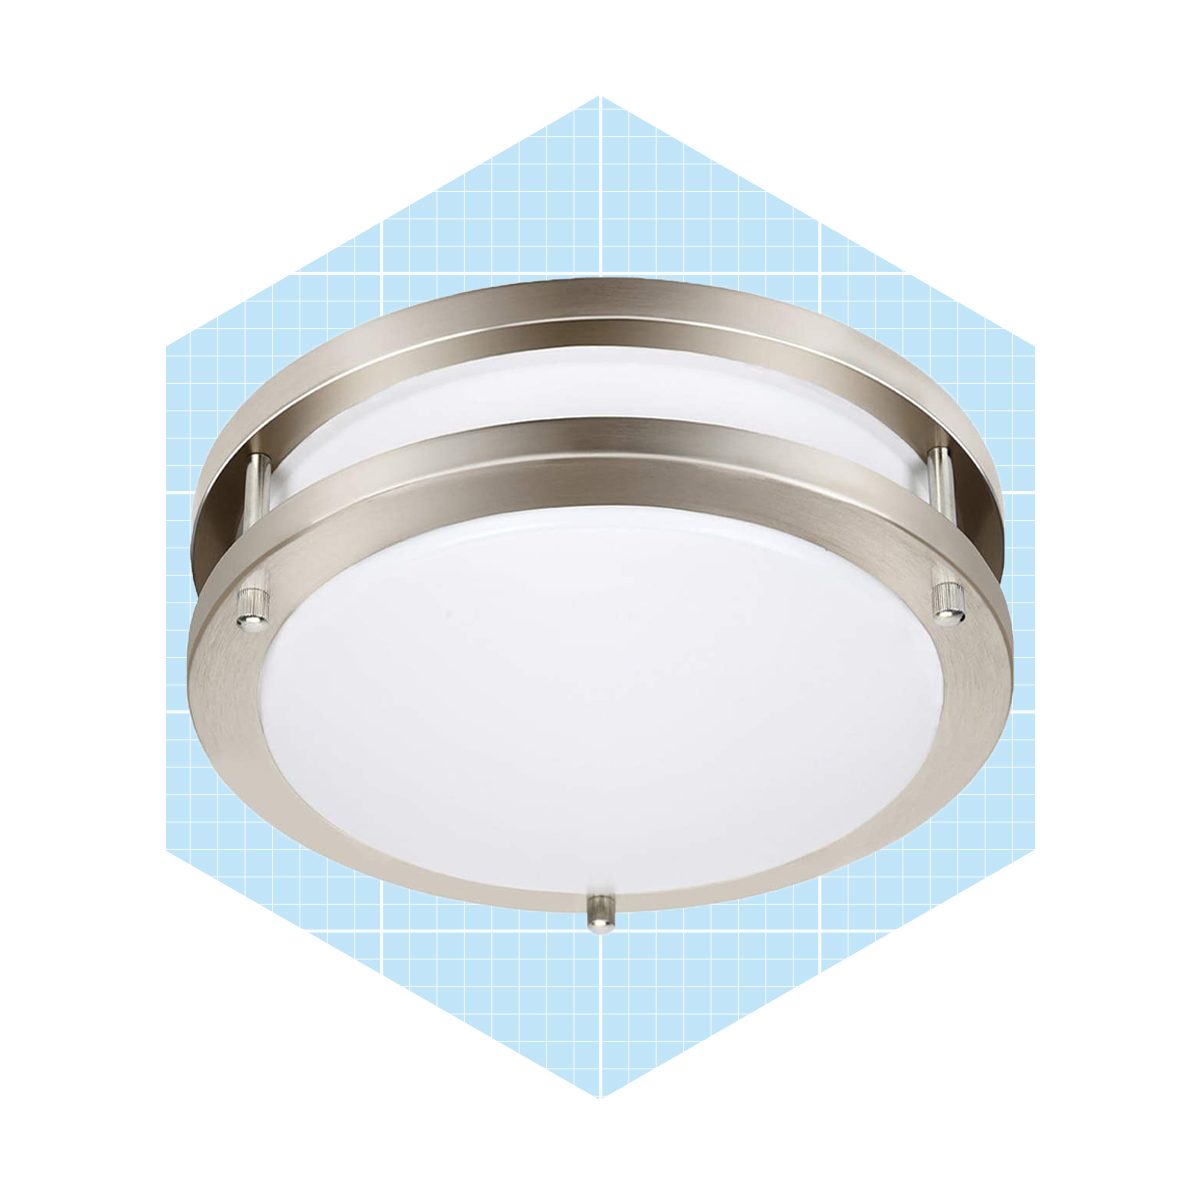 Drosbey 36W LED Ceiling Light Fixture Ecomm Amazon.com  ?resize=522